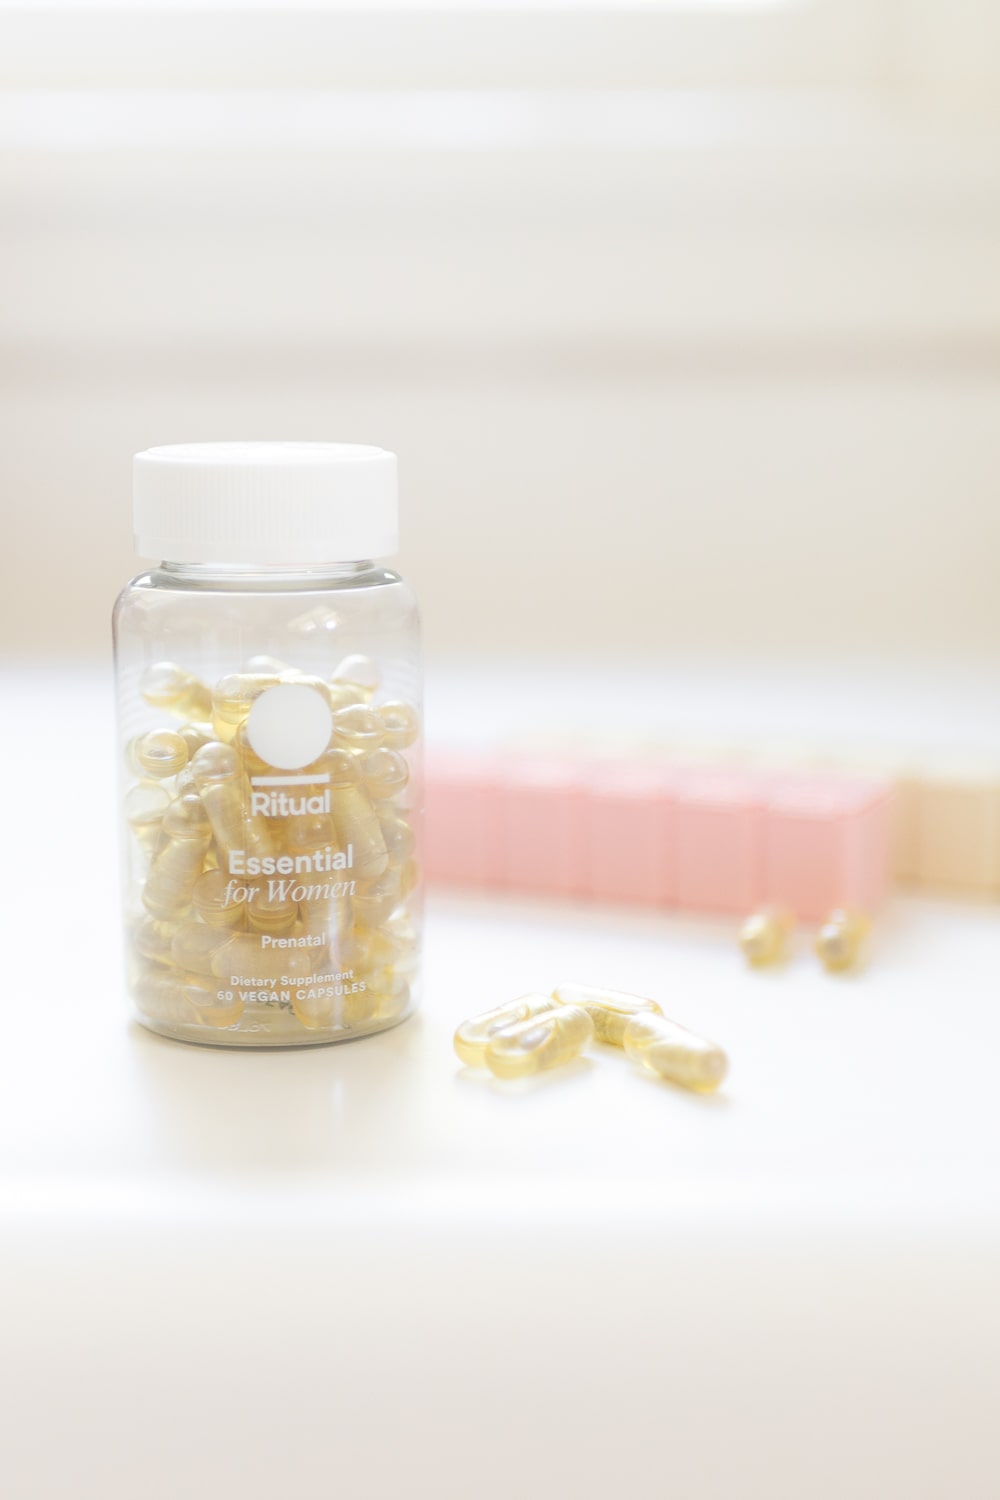 ritual prenatal vitamins review by blogger Stephanie Ziajka on Diary of a Debutante